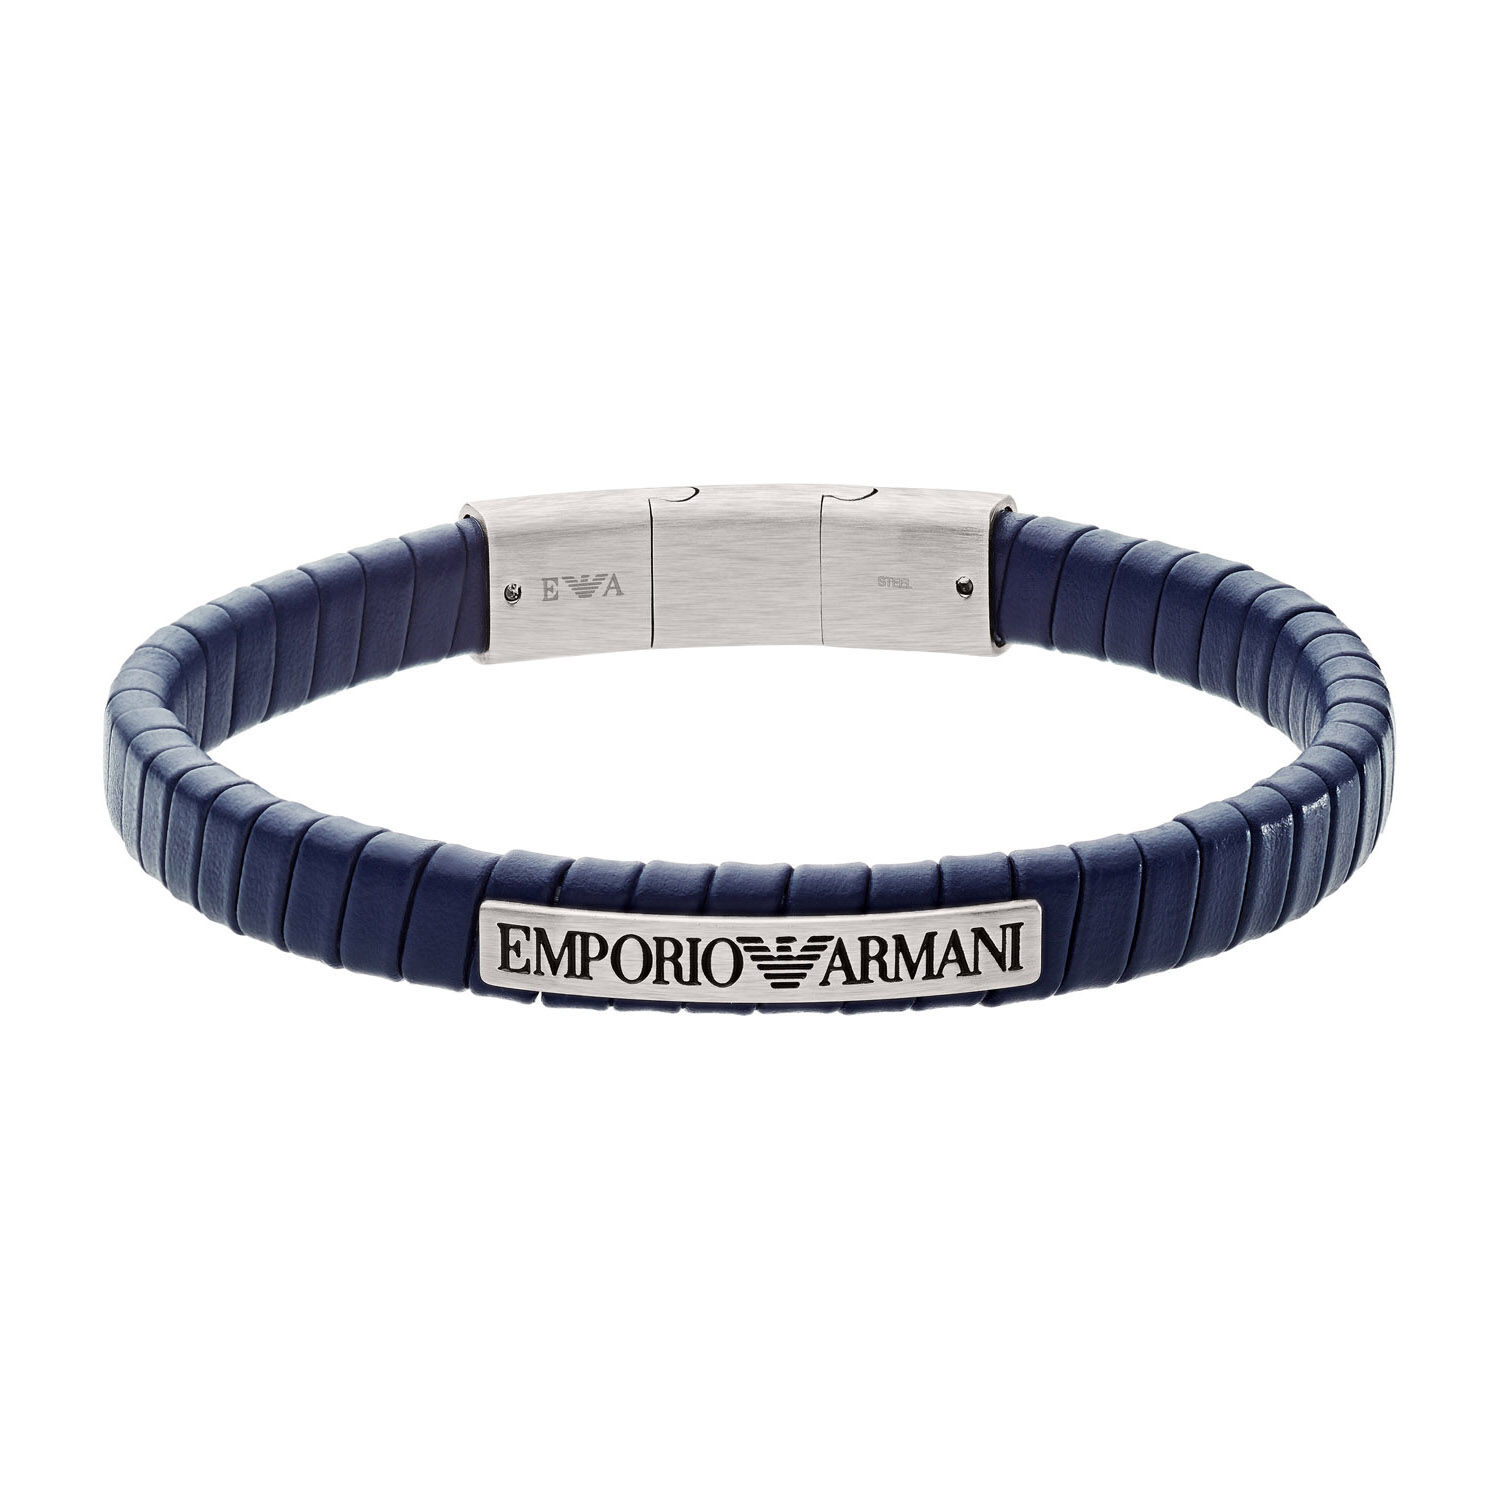 Emporio Armani Gold Tone and Black Leather Men's Bracelet | 0121257 |  Beaverbrooks the Jewellers